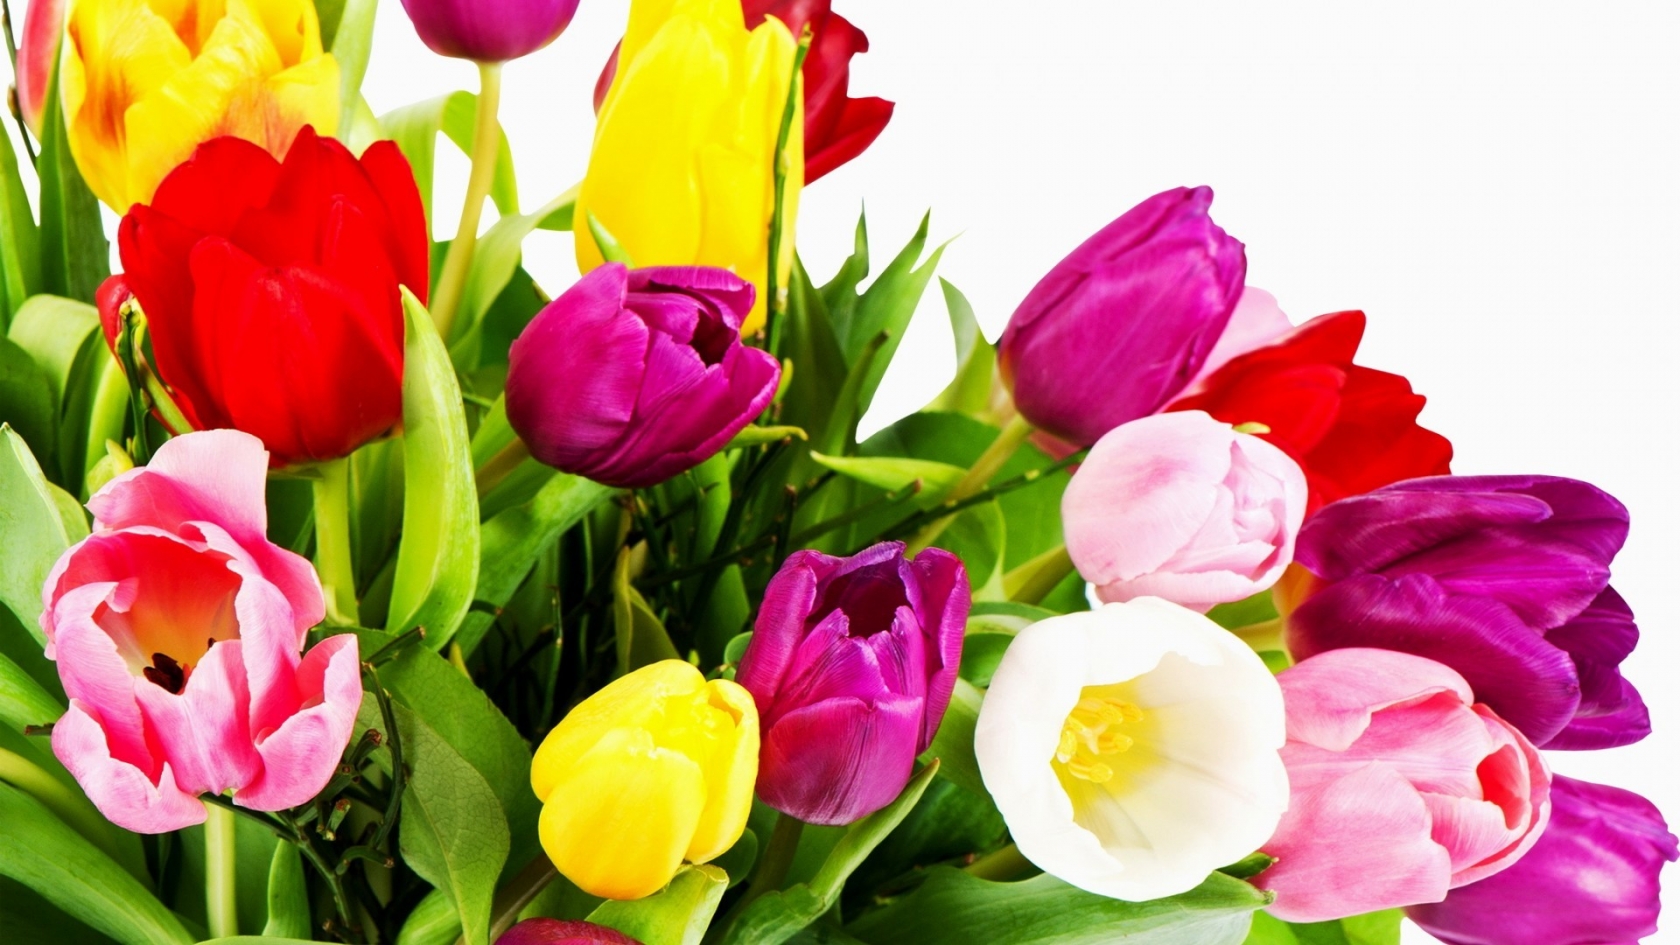 Wonderful Tulips for 1680 x 945 HDTV resolution